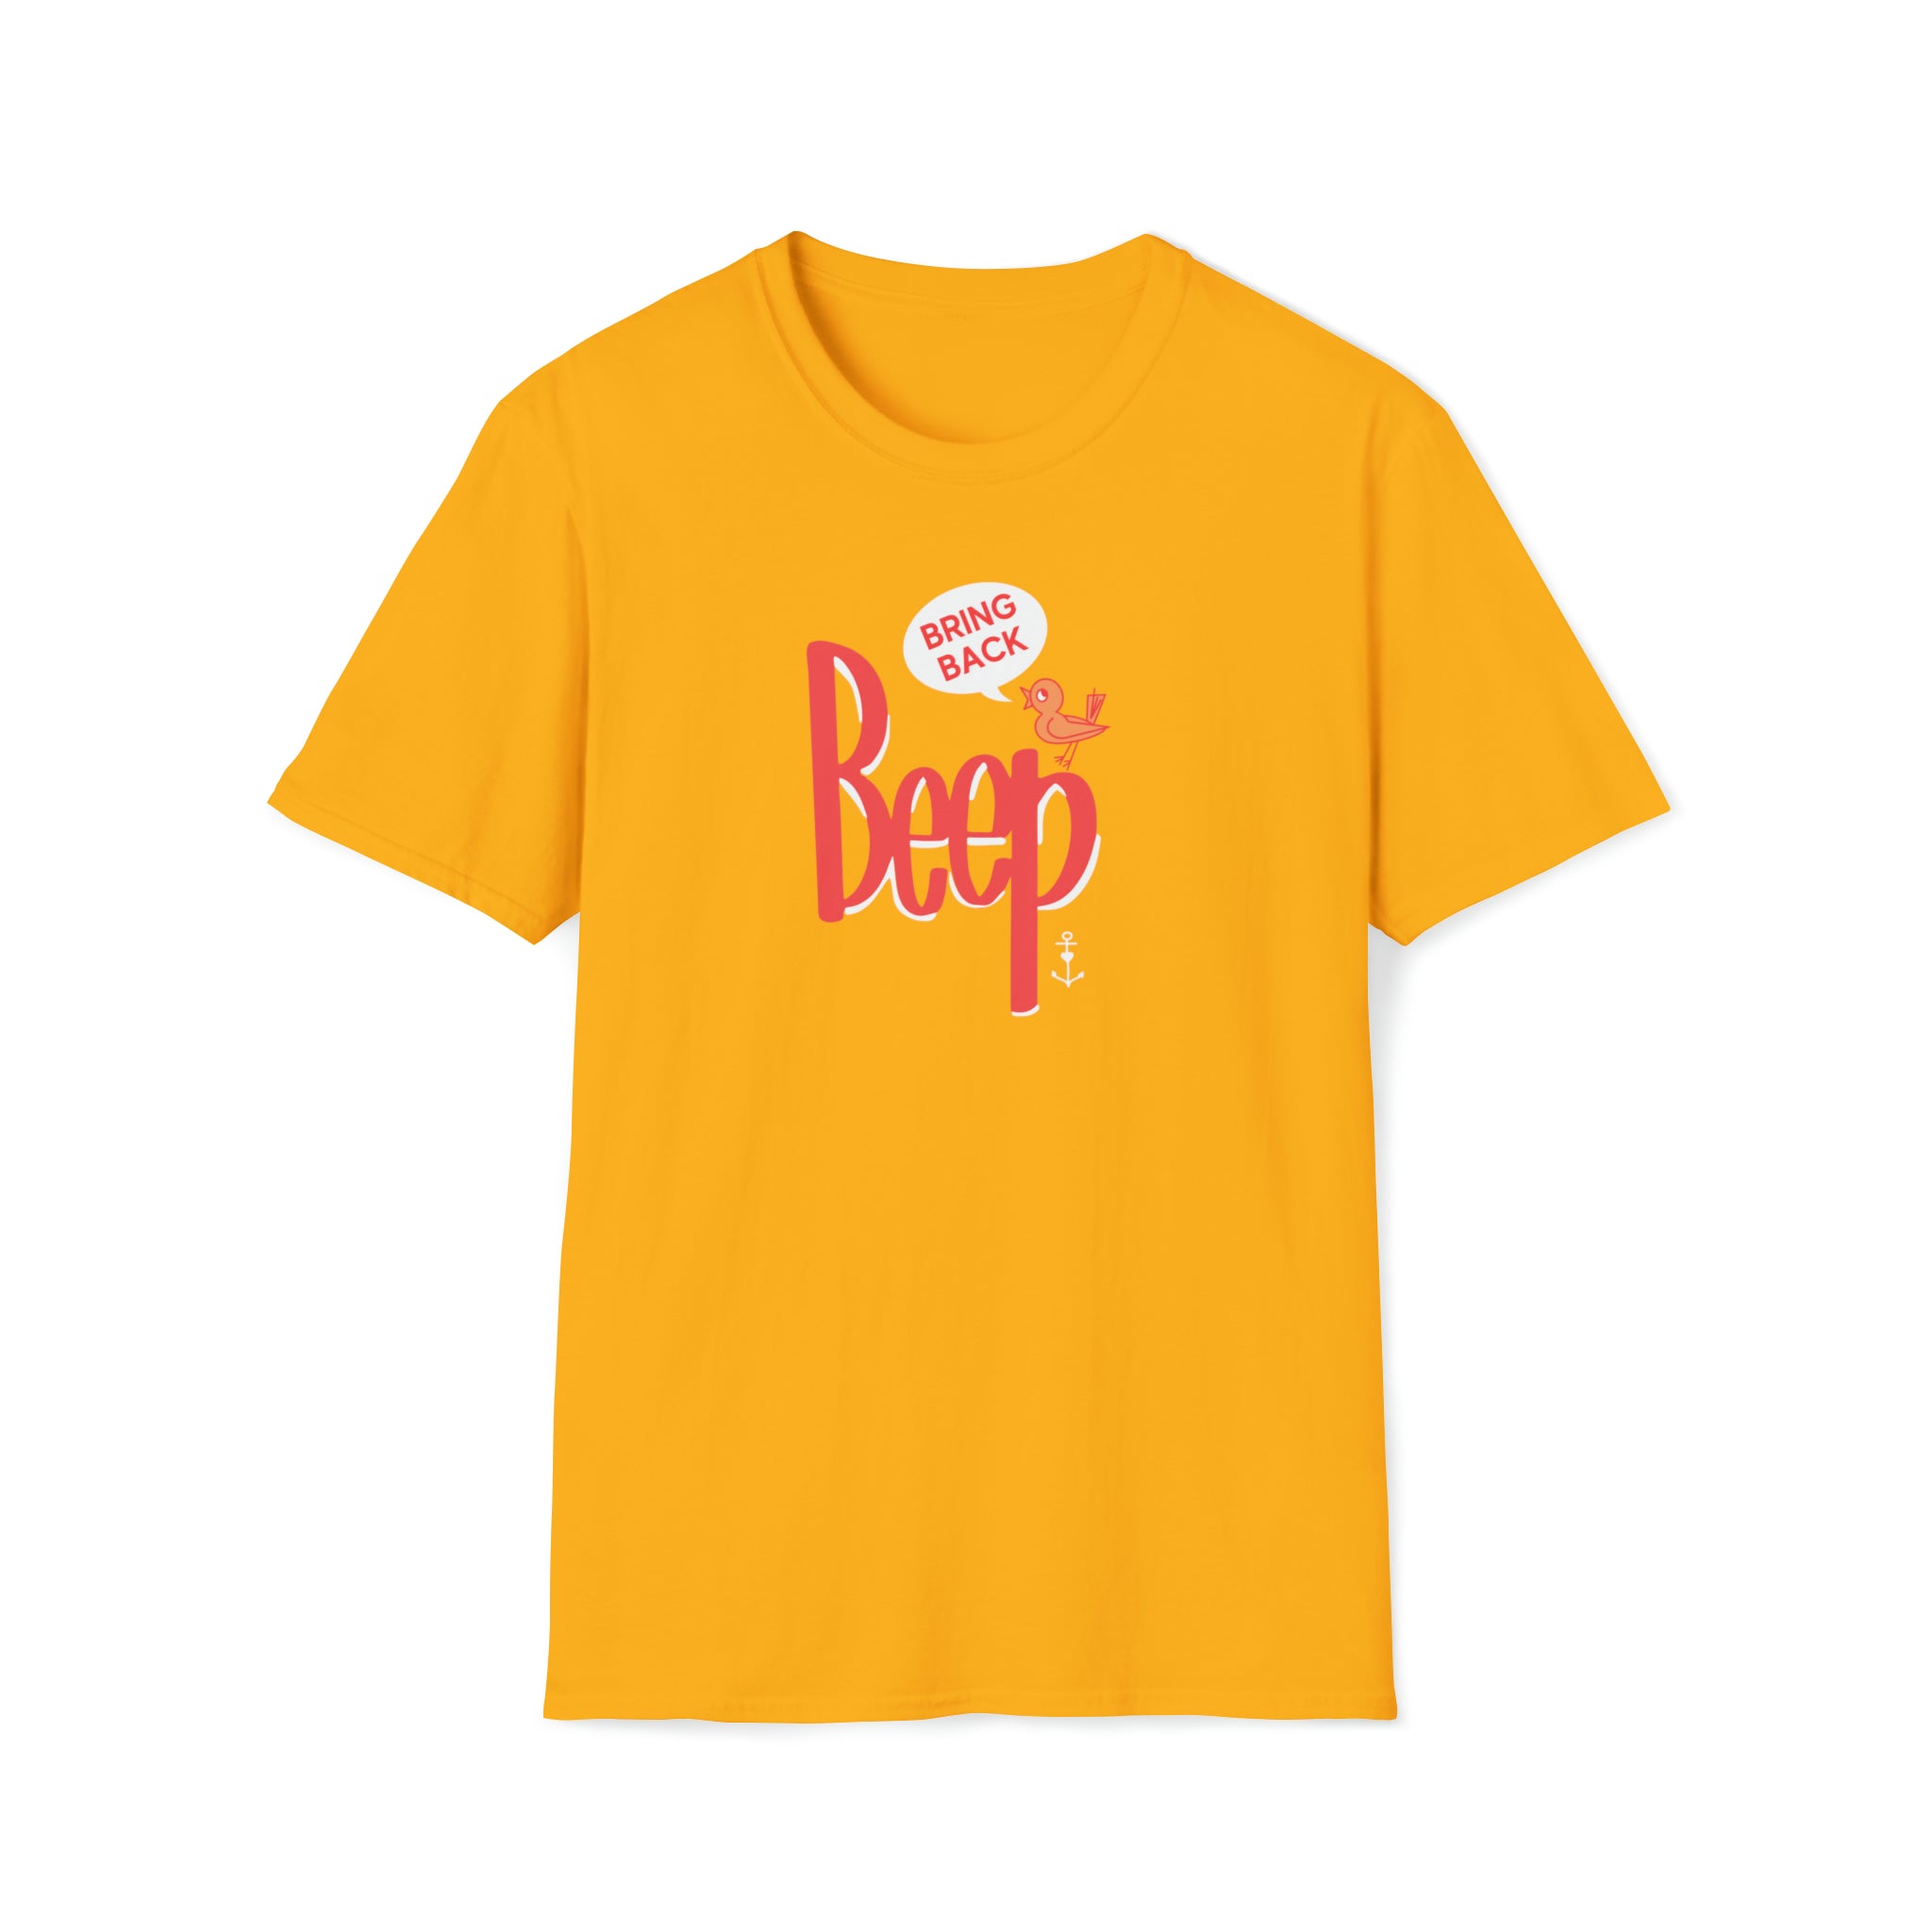 Bring Back Beep! Unisex T-Shirt